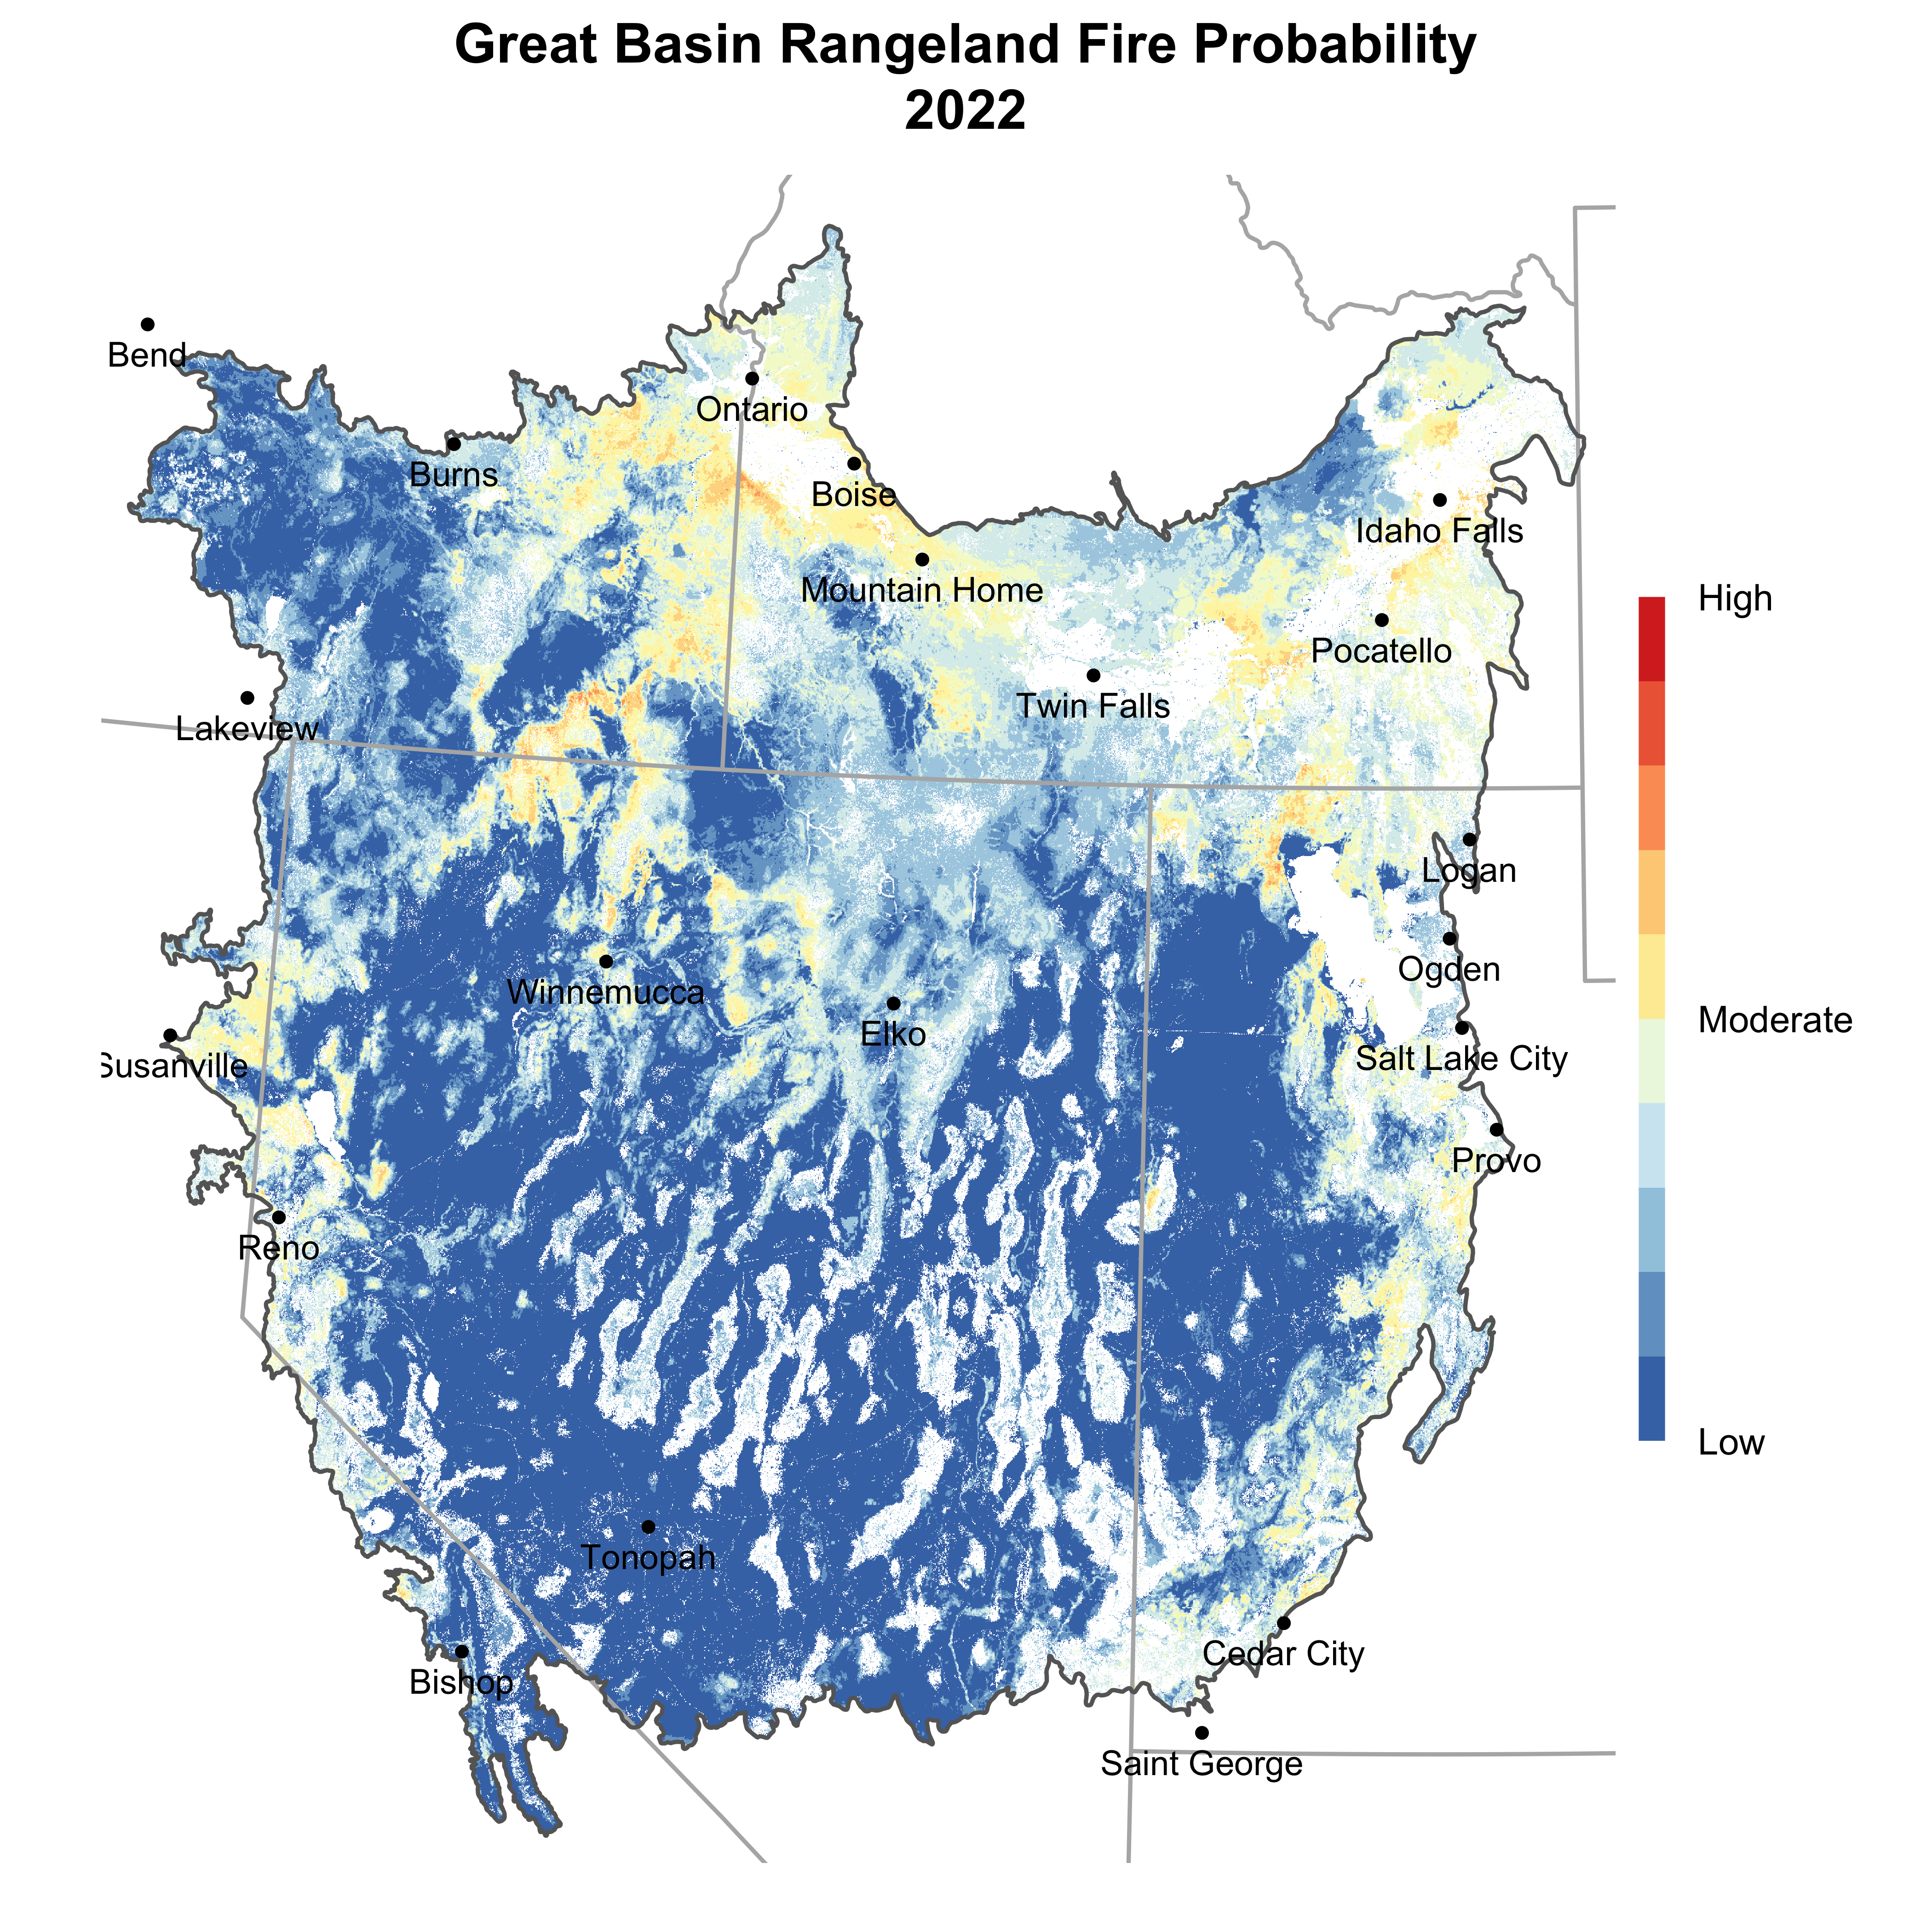 Great Basin rangeland fire
probability